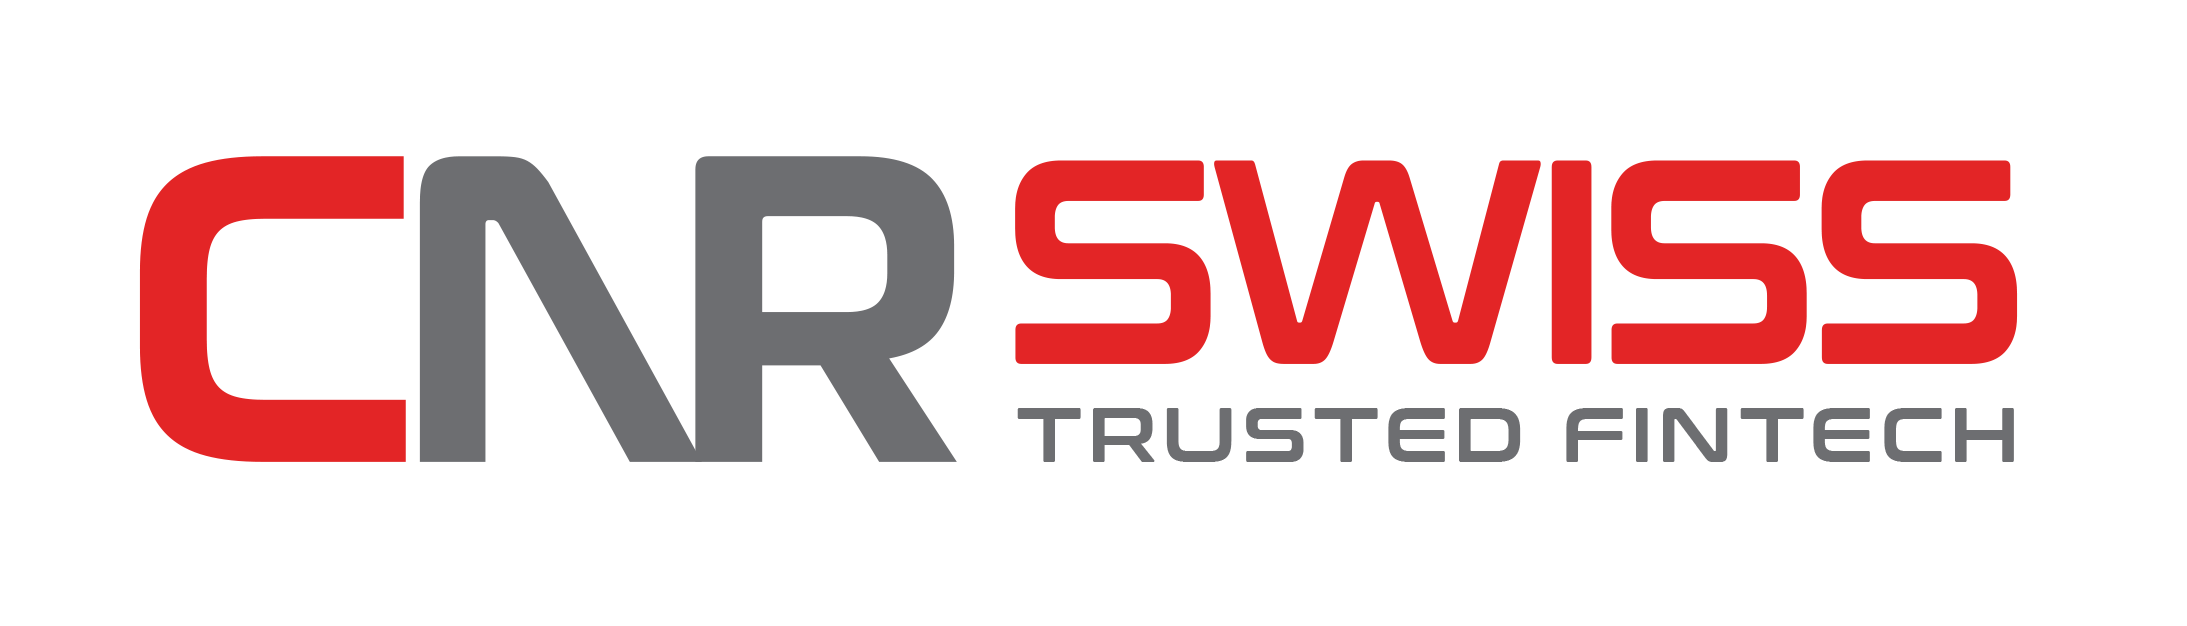 logo_CNR_Swiss